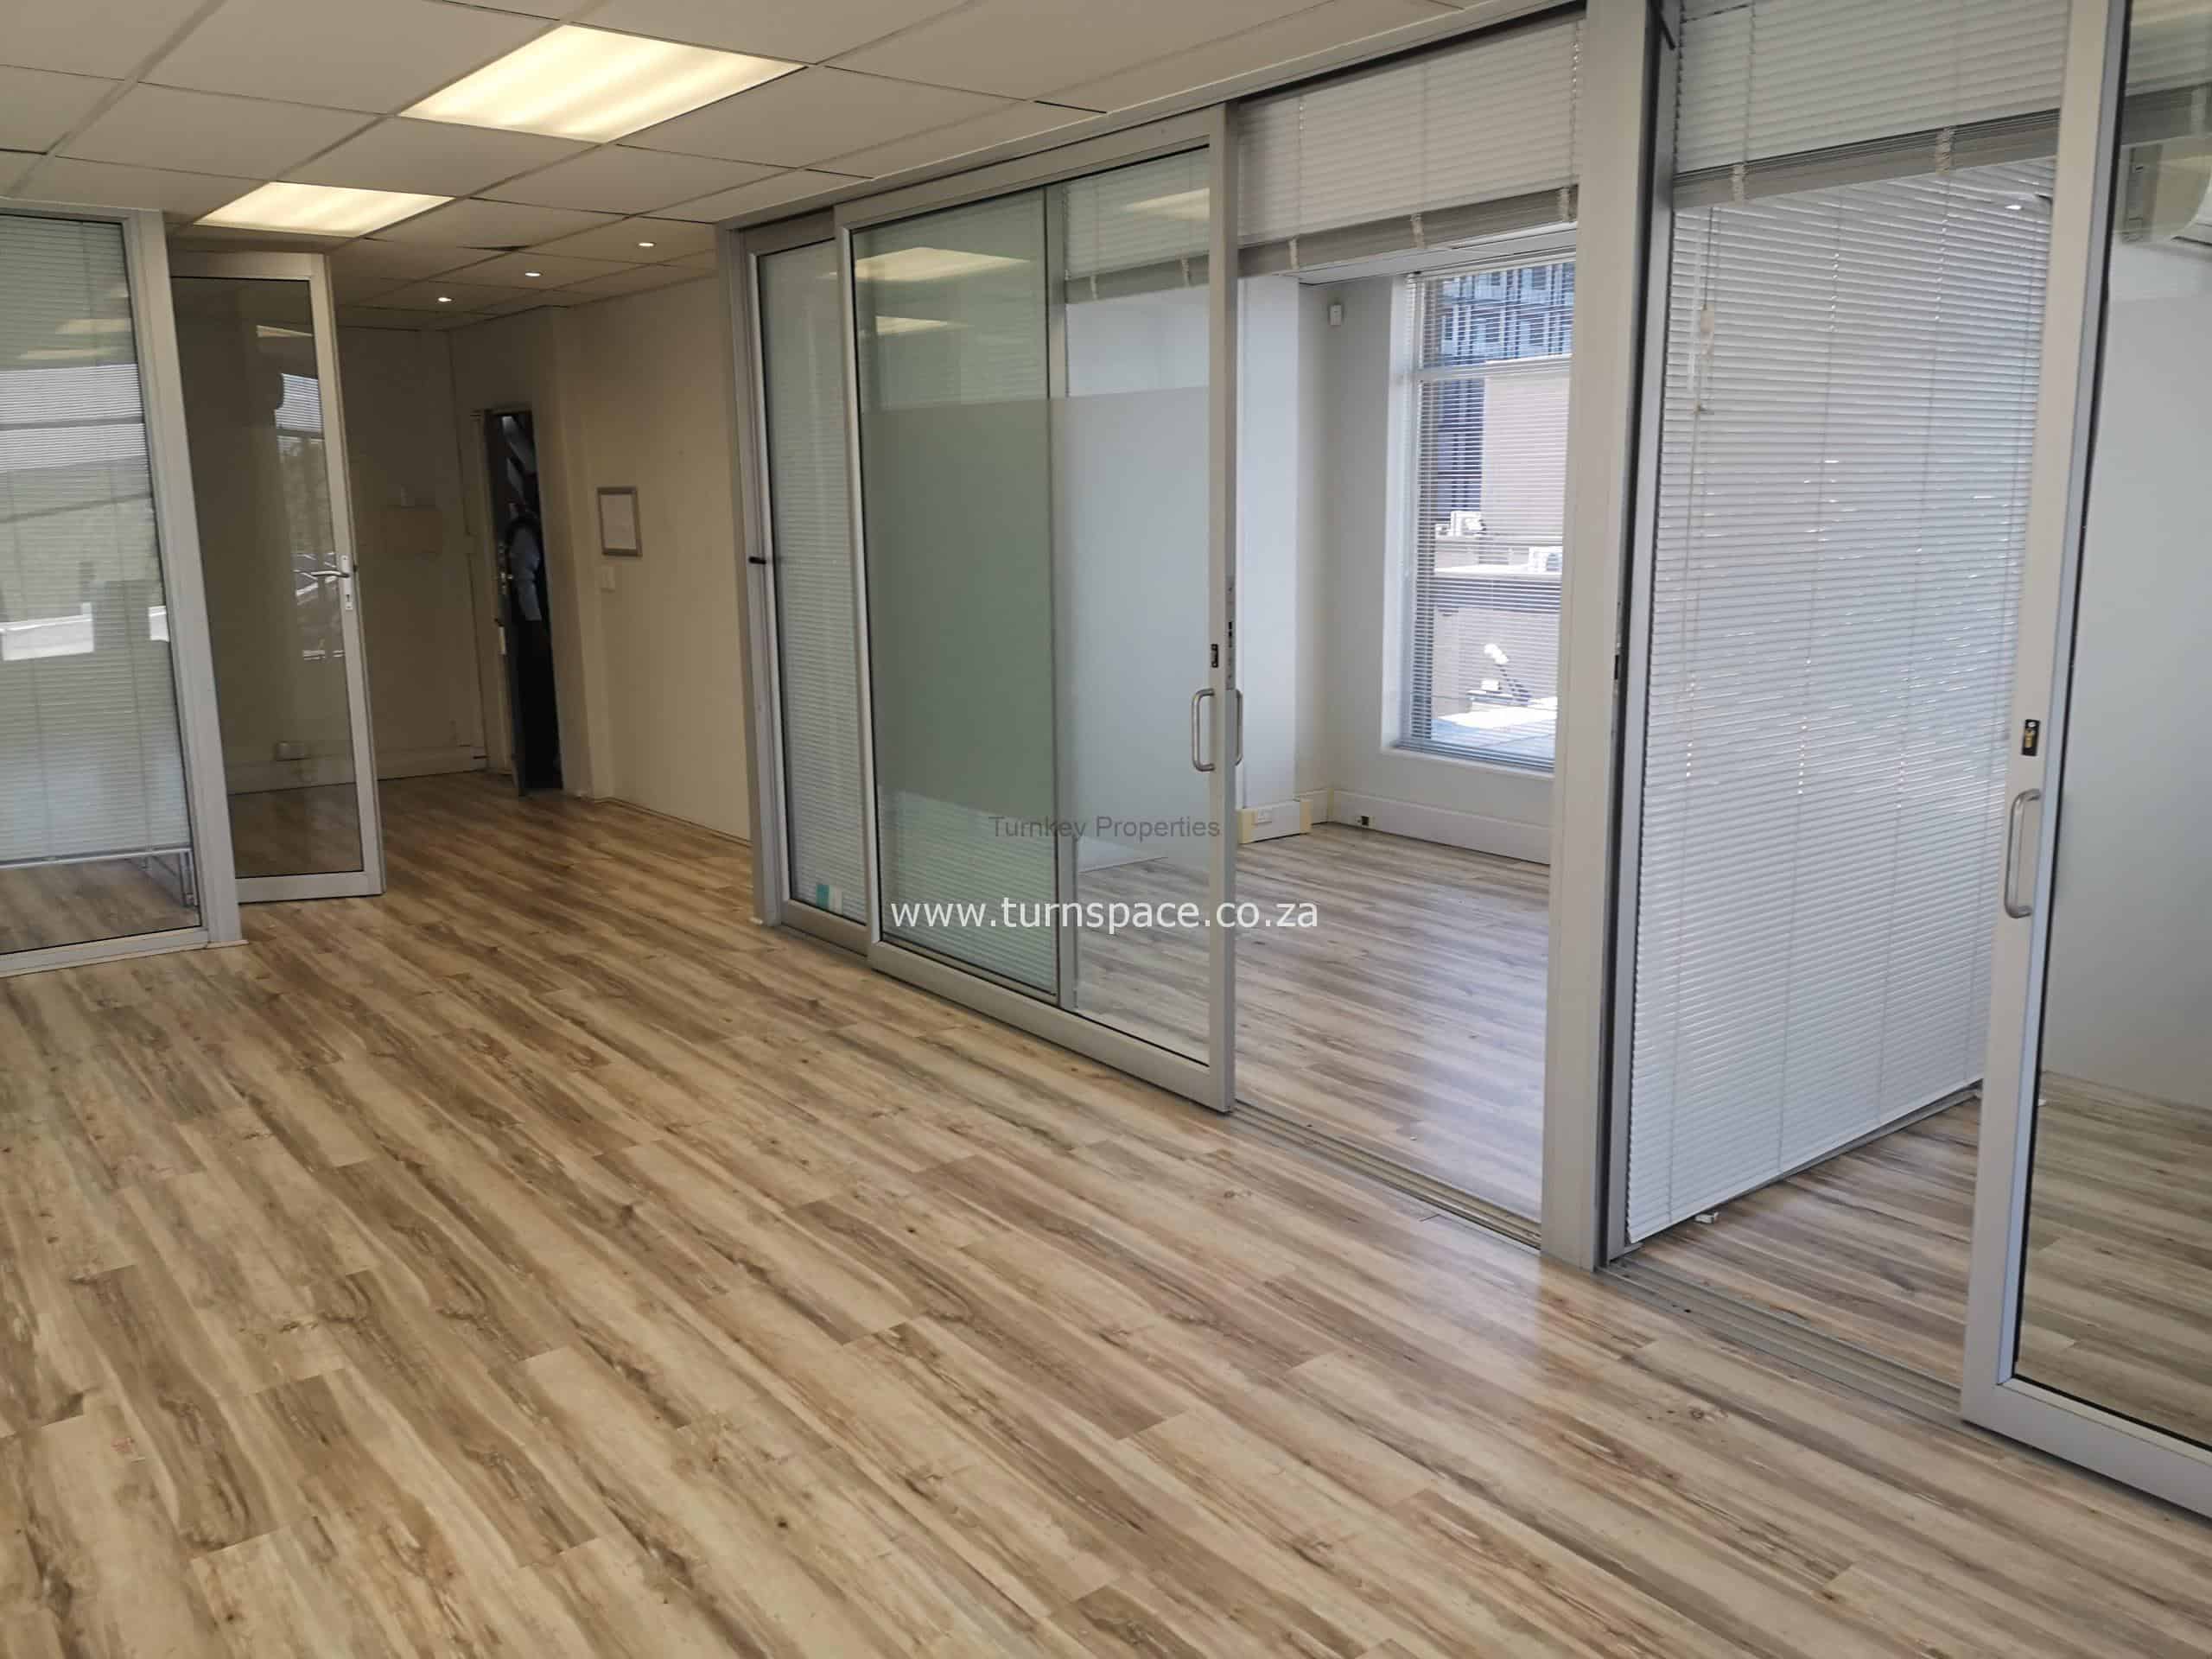 144m² Office Space to Rent Rosebank 8 Sturdee